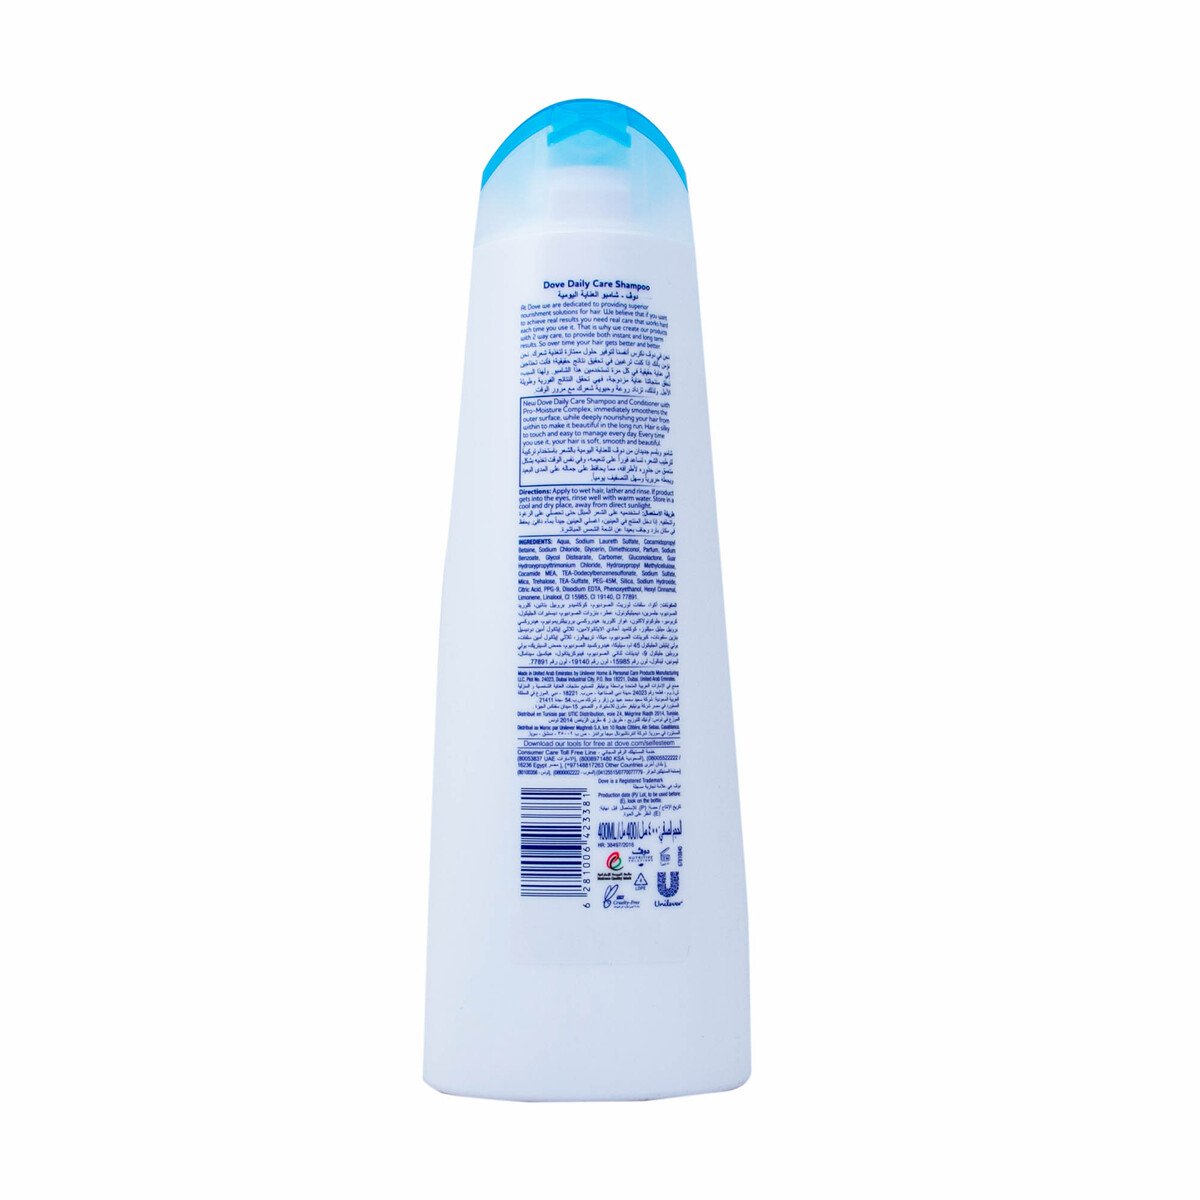 Dove Daily Care Shampoo 400 ml